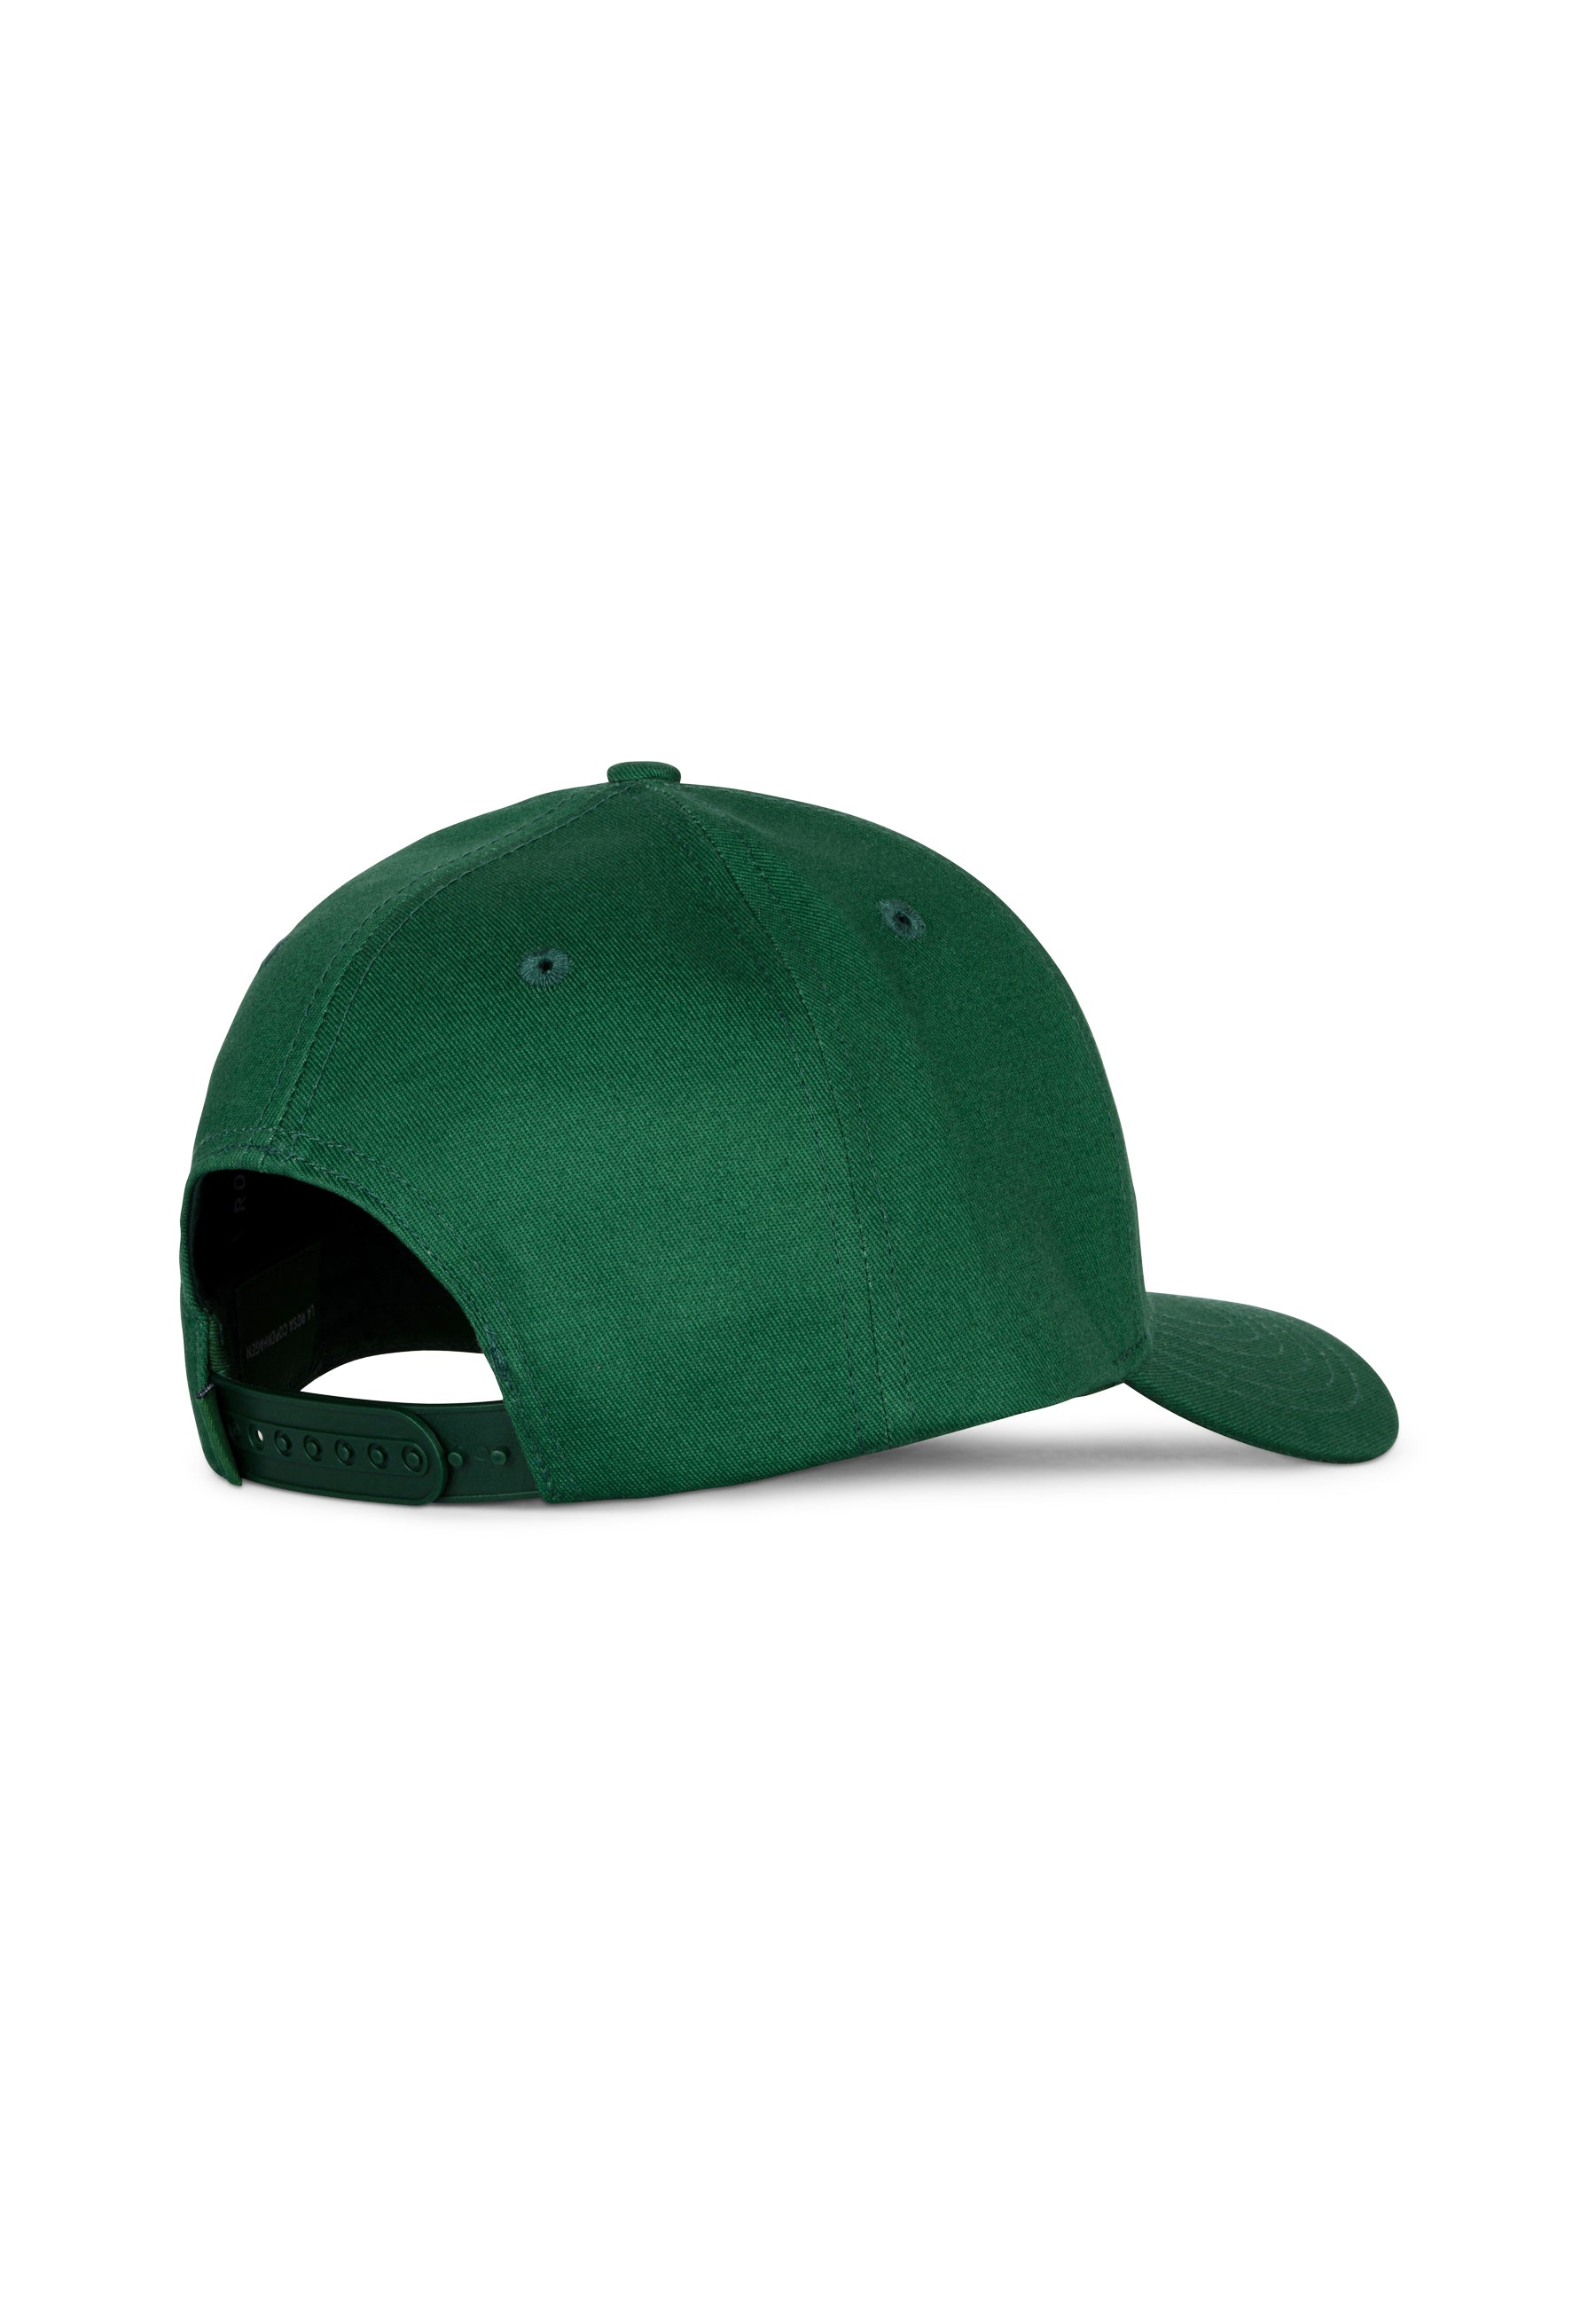 LR BASEBALL CAP - GREEN